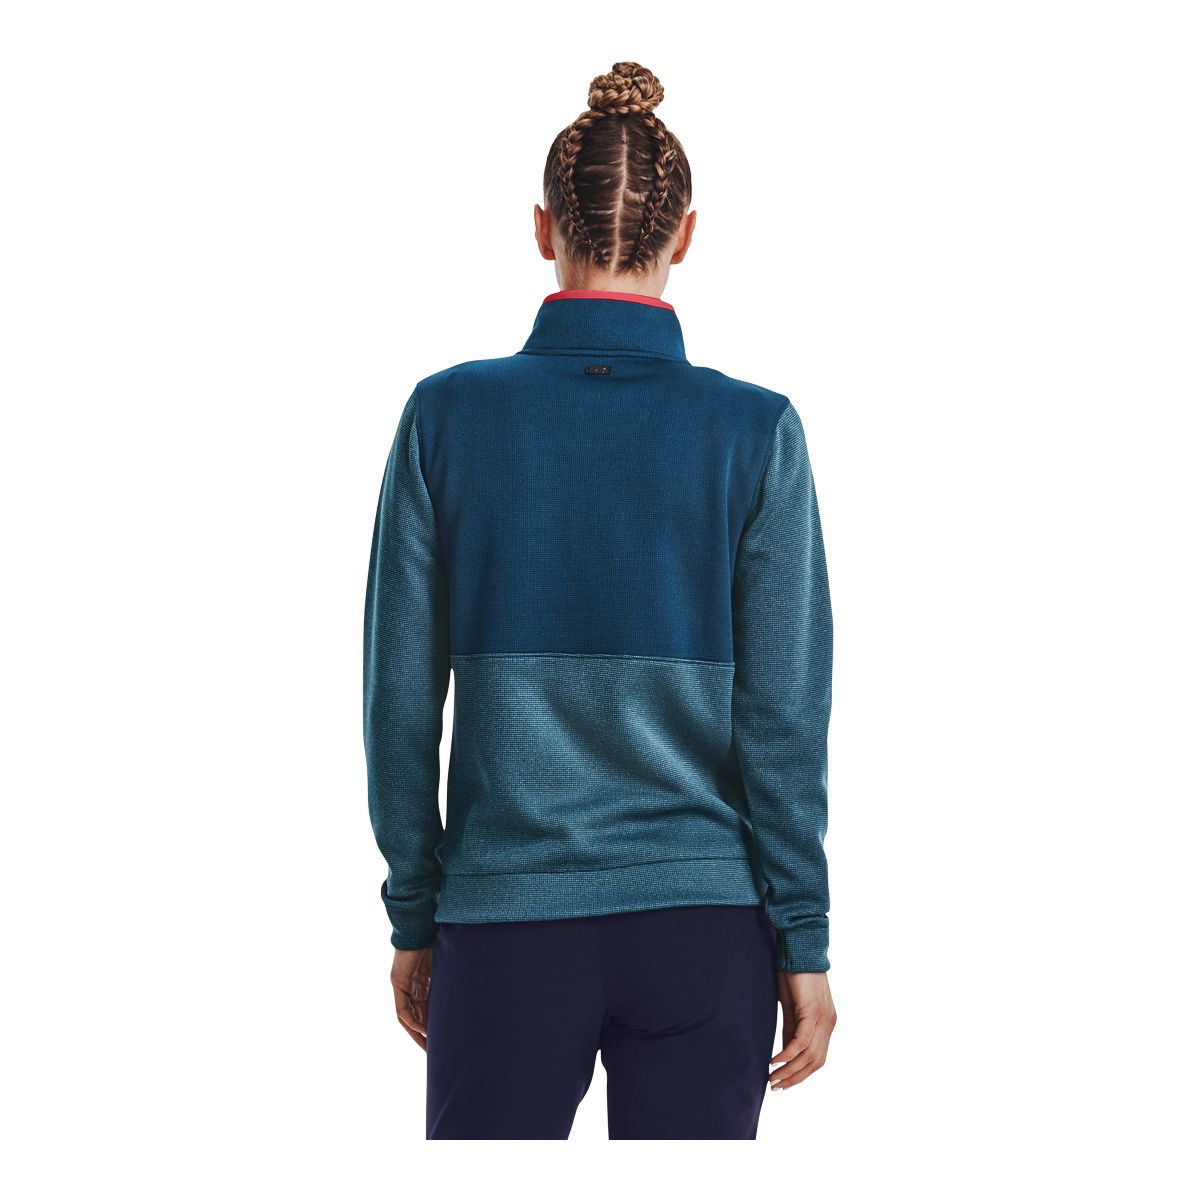 North Face® Sweater Fleece Jacket - Women's** (Restrictions Apply